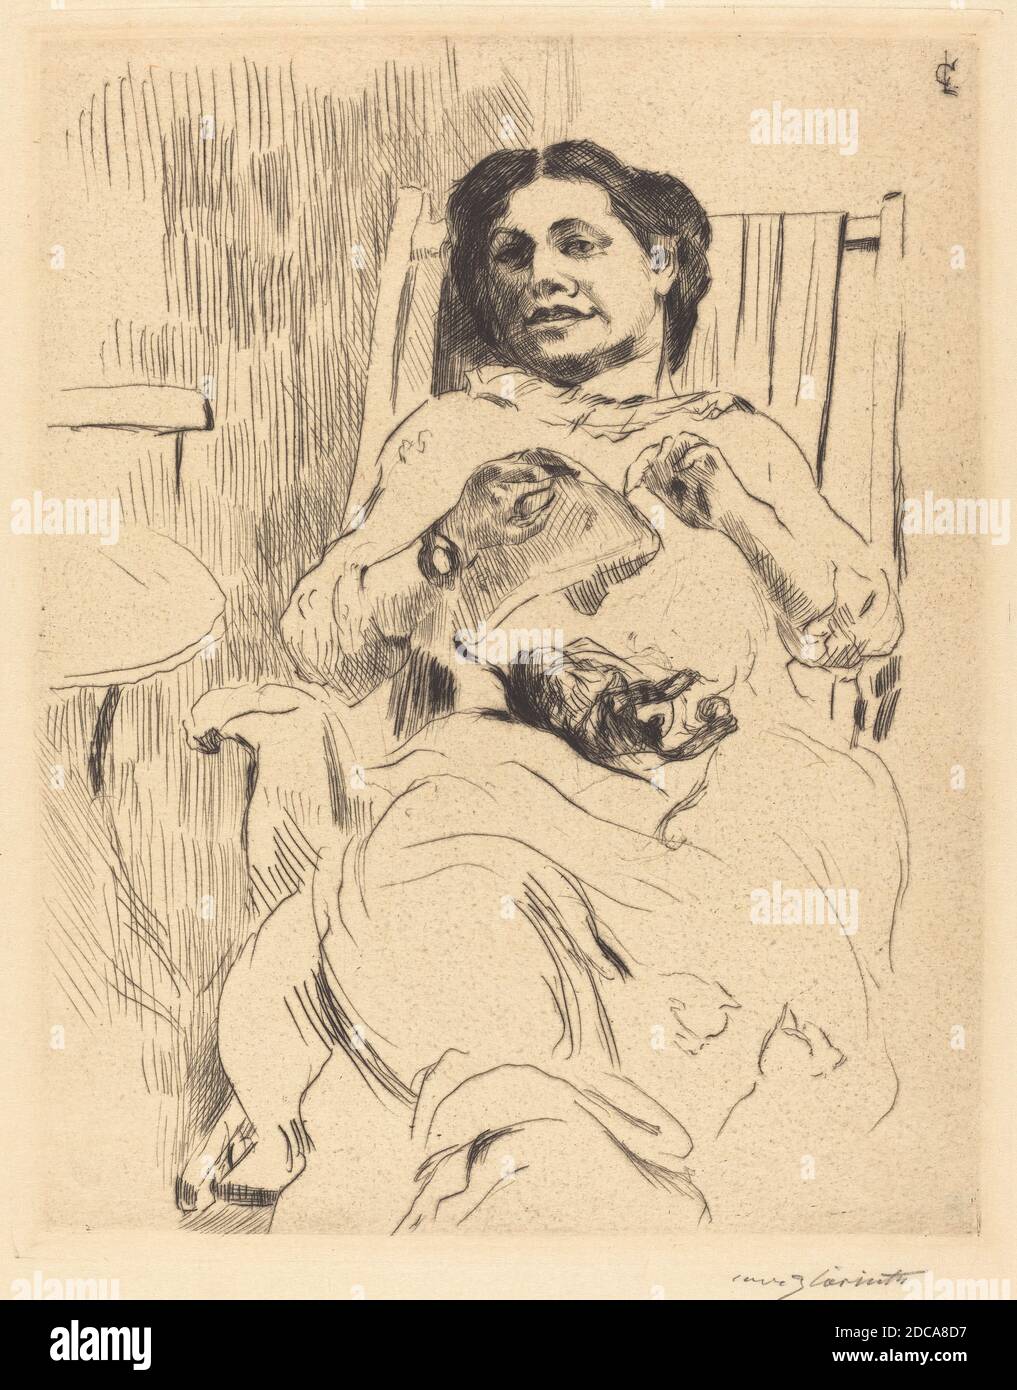 Lovis Corinth, (artista), tedesco, 1858 - 1925, Galerie Paul Cassirer, (editore), attivo c.. 1903 - 1933, Frau mit Handarbeit (Donna con aghi), 1912, punto di essiccazione in nero su carta da wove, piastra: 24.8 x 19.6 cm (9 3/4 x 7 11/16 pollici), foglio: 37.9 x 24.5 cm (14 15/16 x 9 5/8 pollici Foto Stock